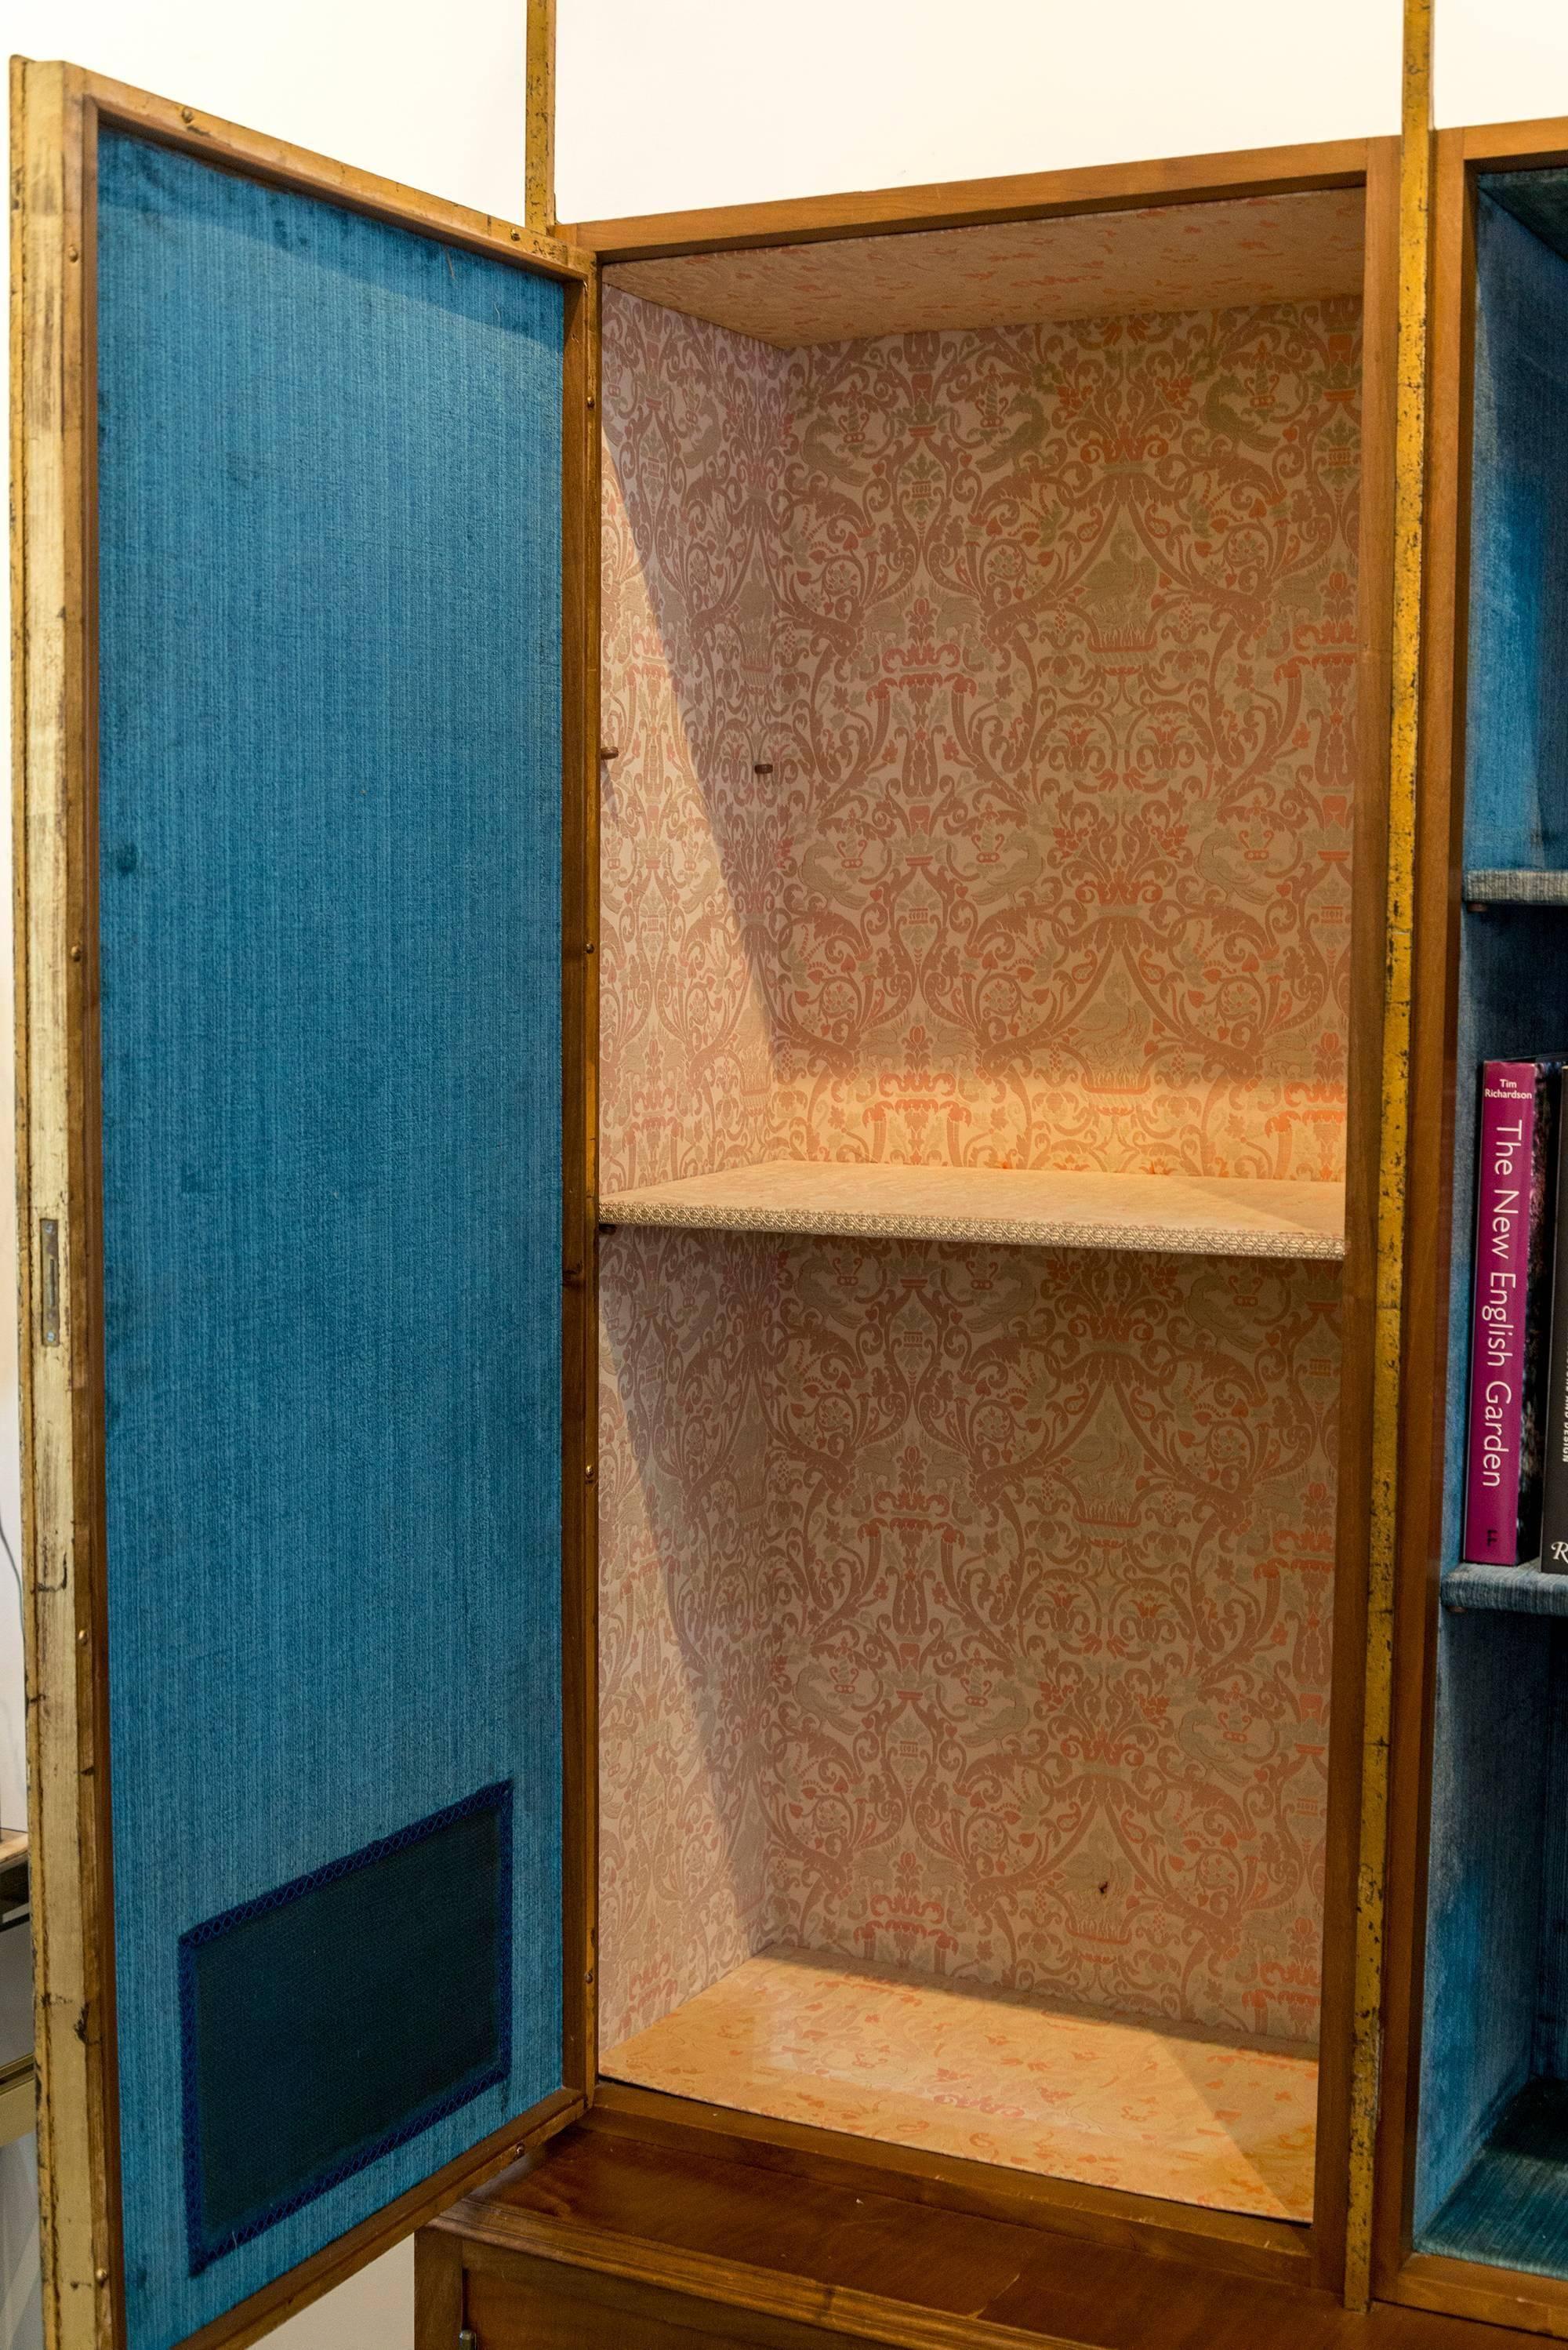 20th Century Library Bookcase from Ava Gardner's Paris Apartment